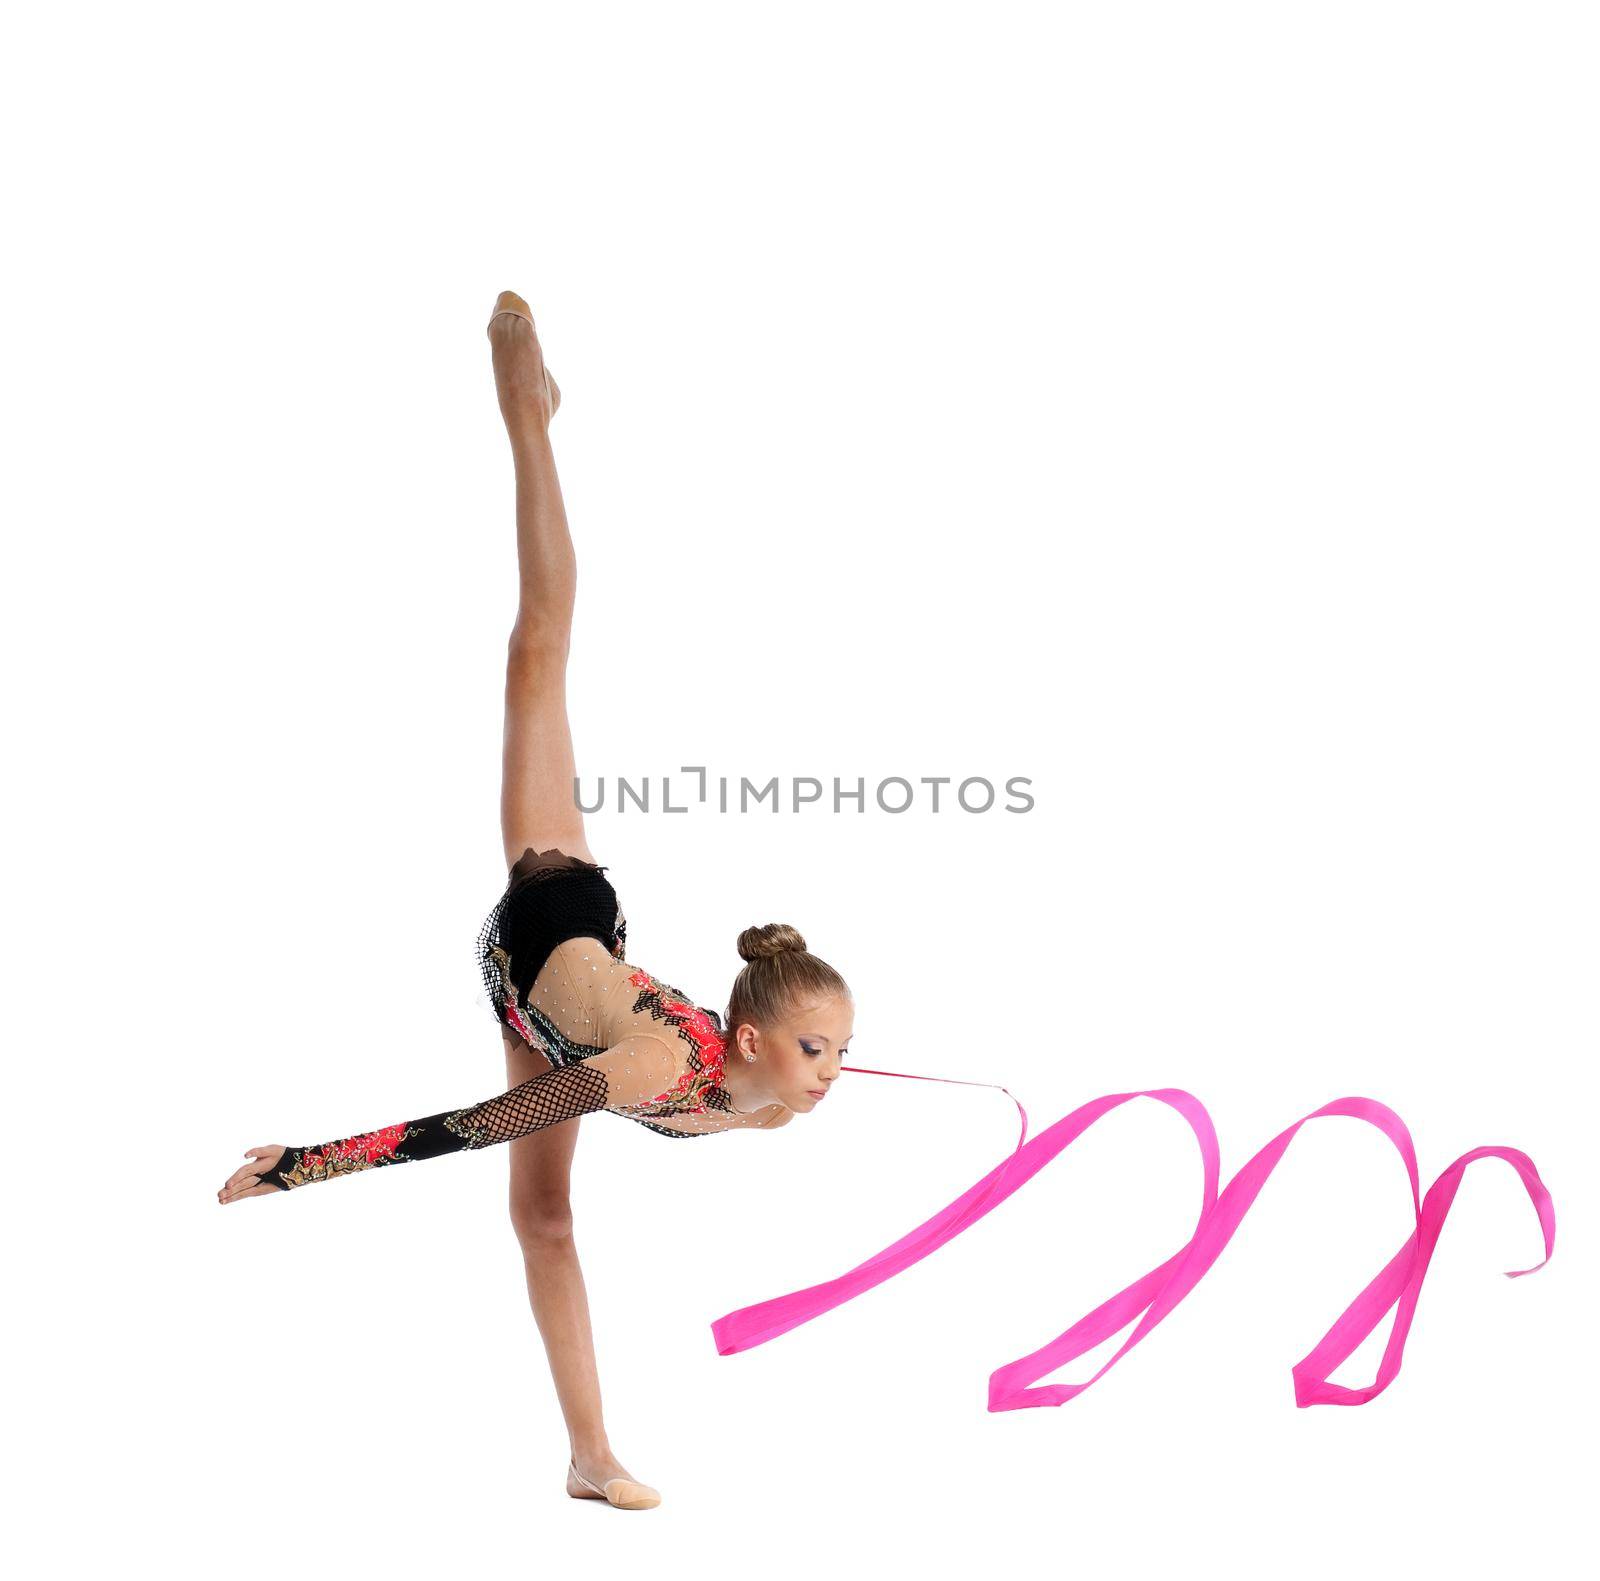 Beautiful teenager girl doing gymnastics split with ribbon